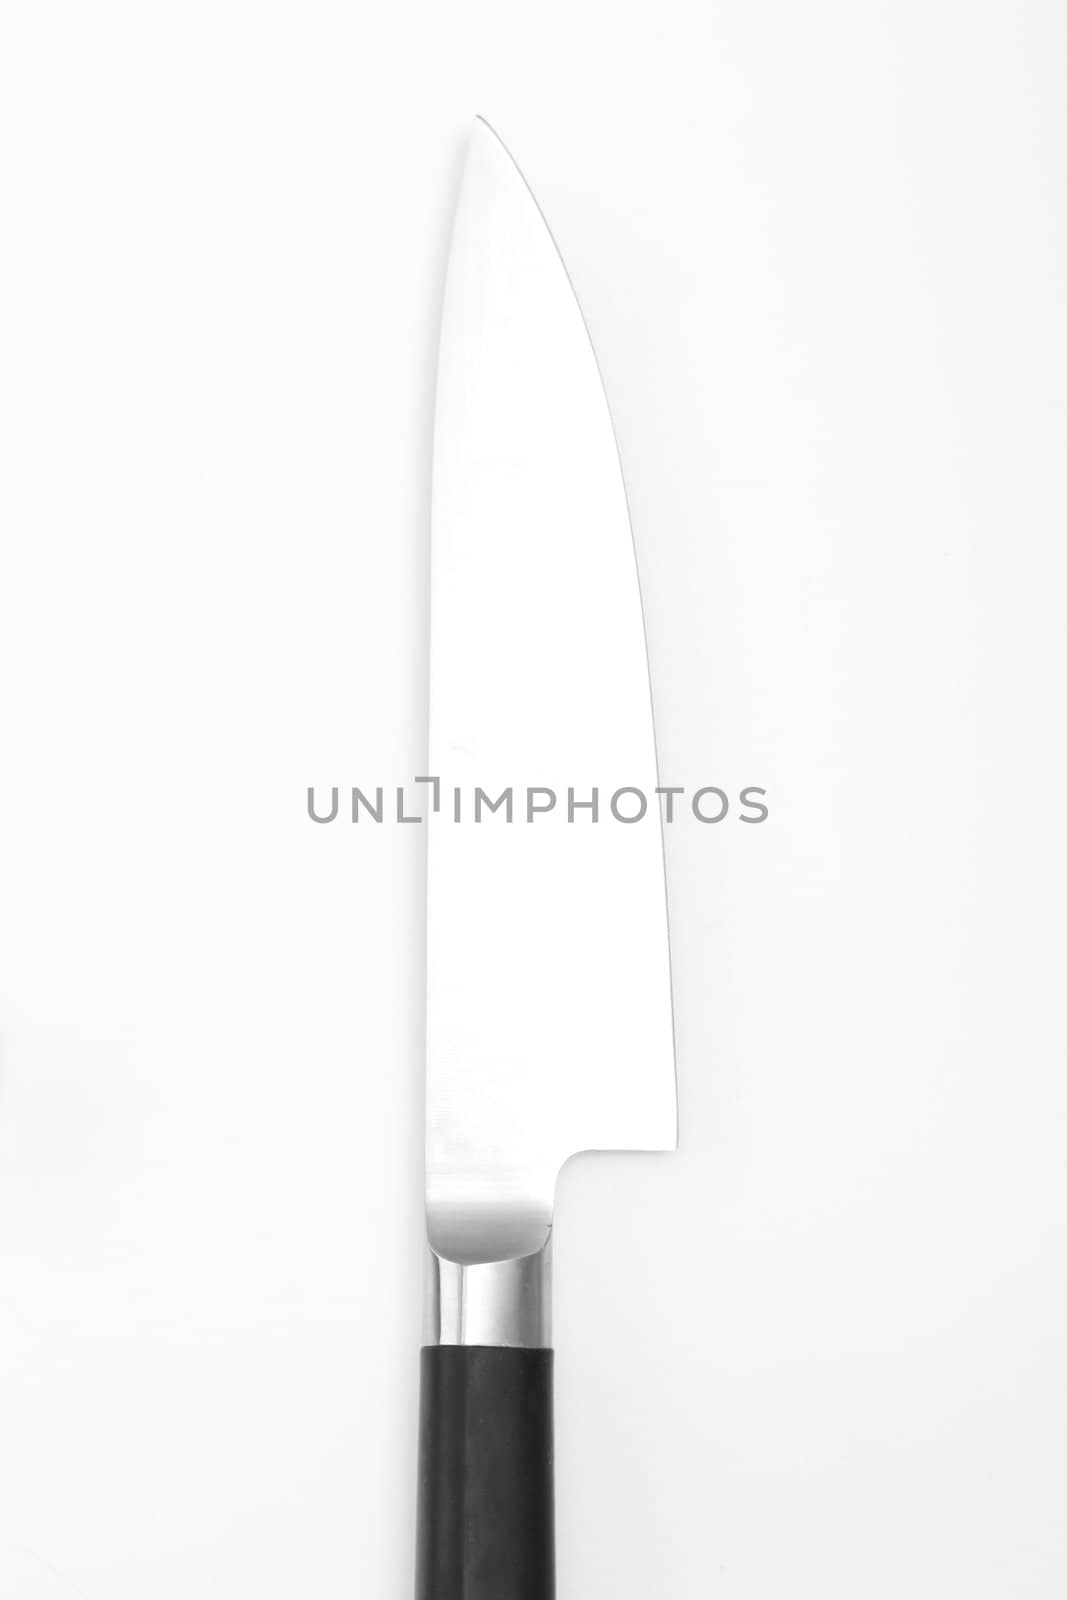 A sharp knife